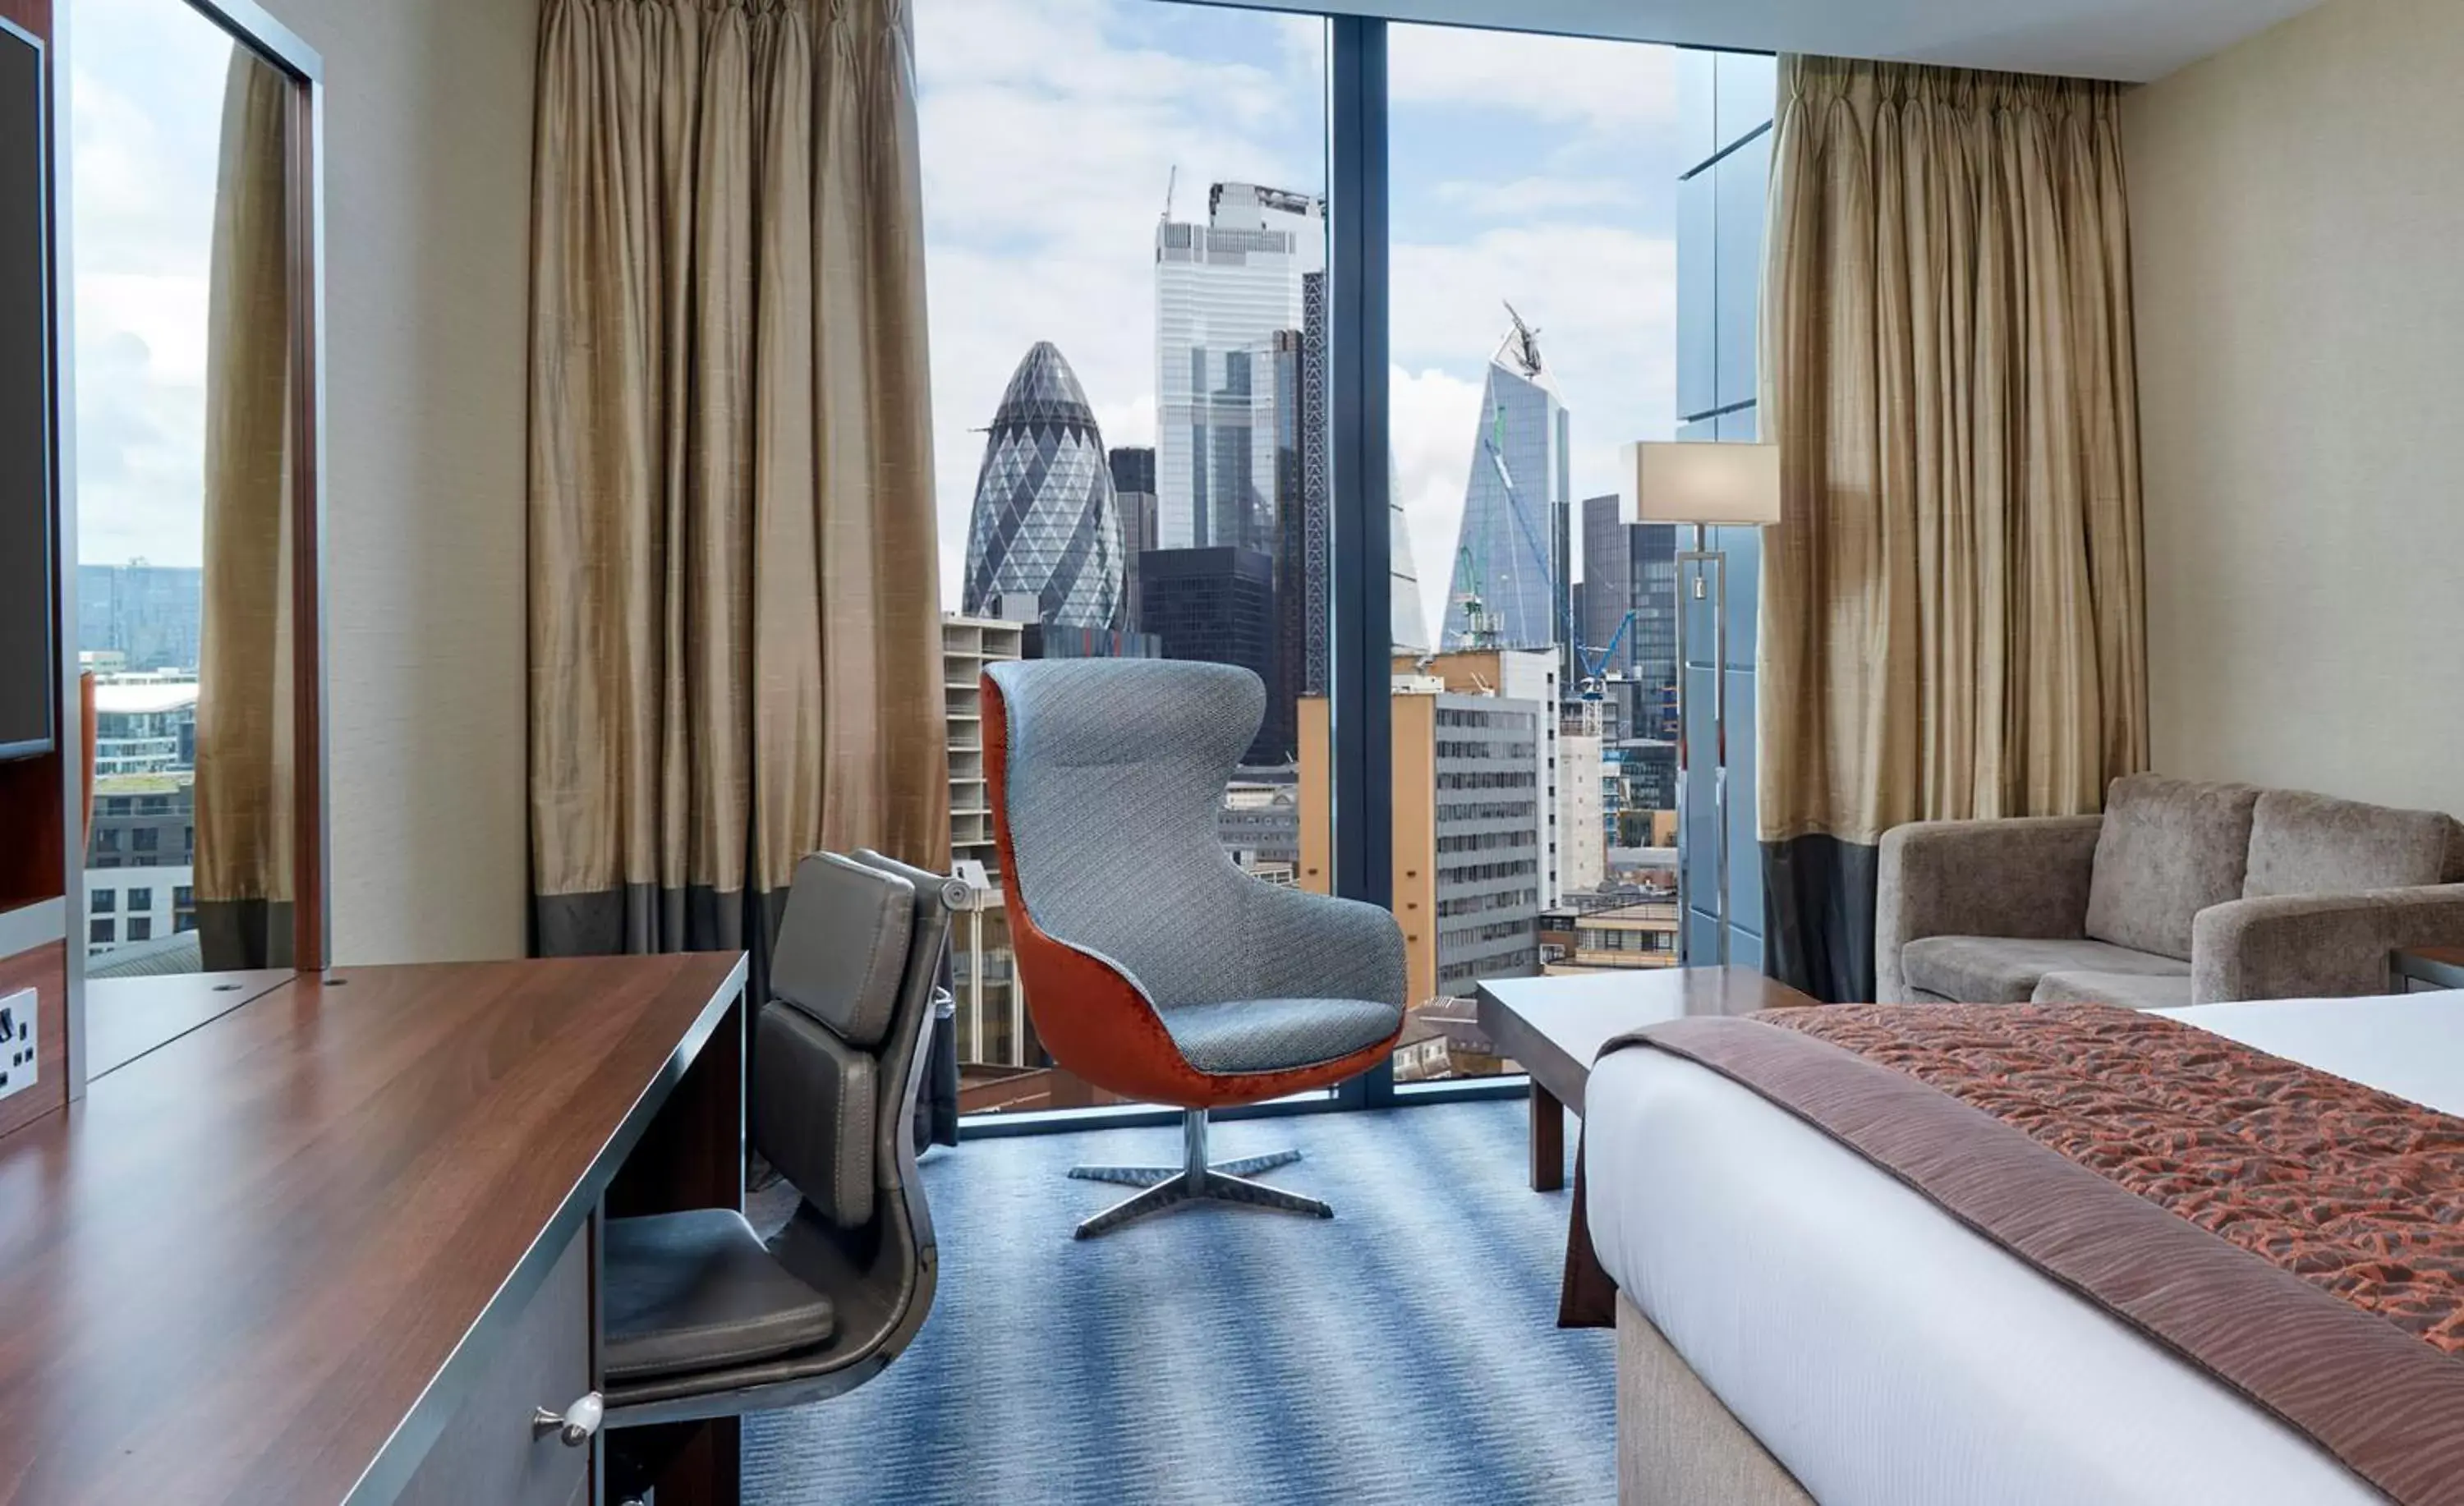 Executive King Room in Leonardo Royal London Tower Bridge